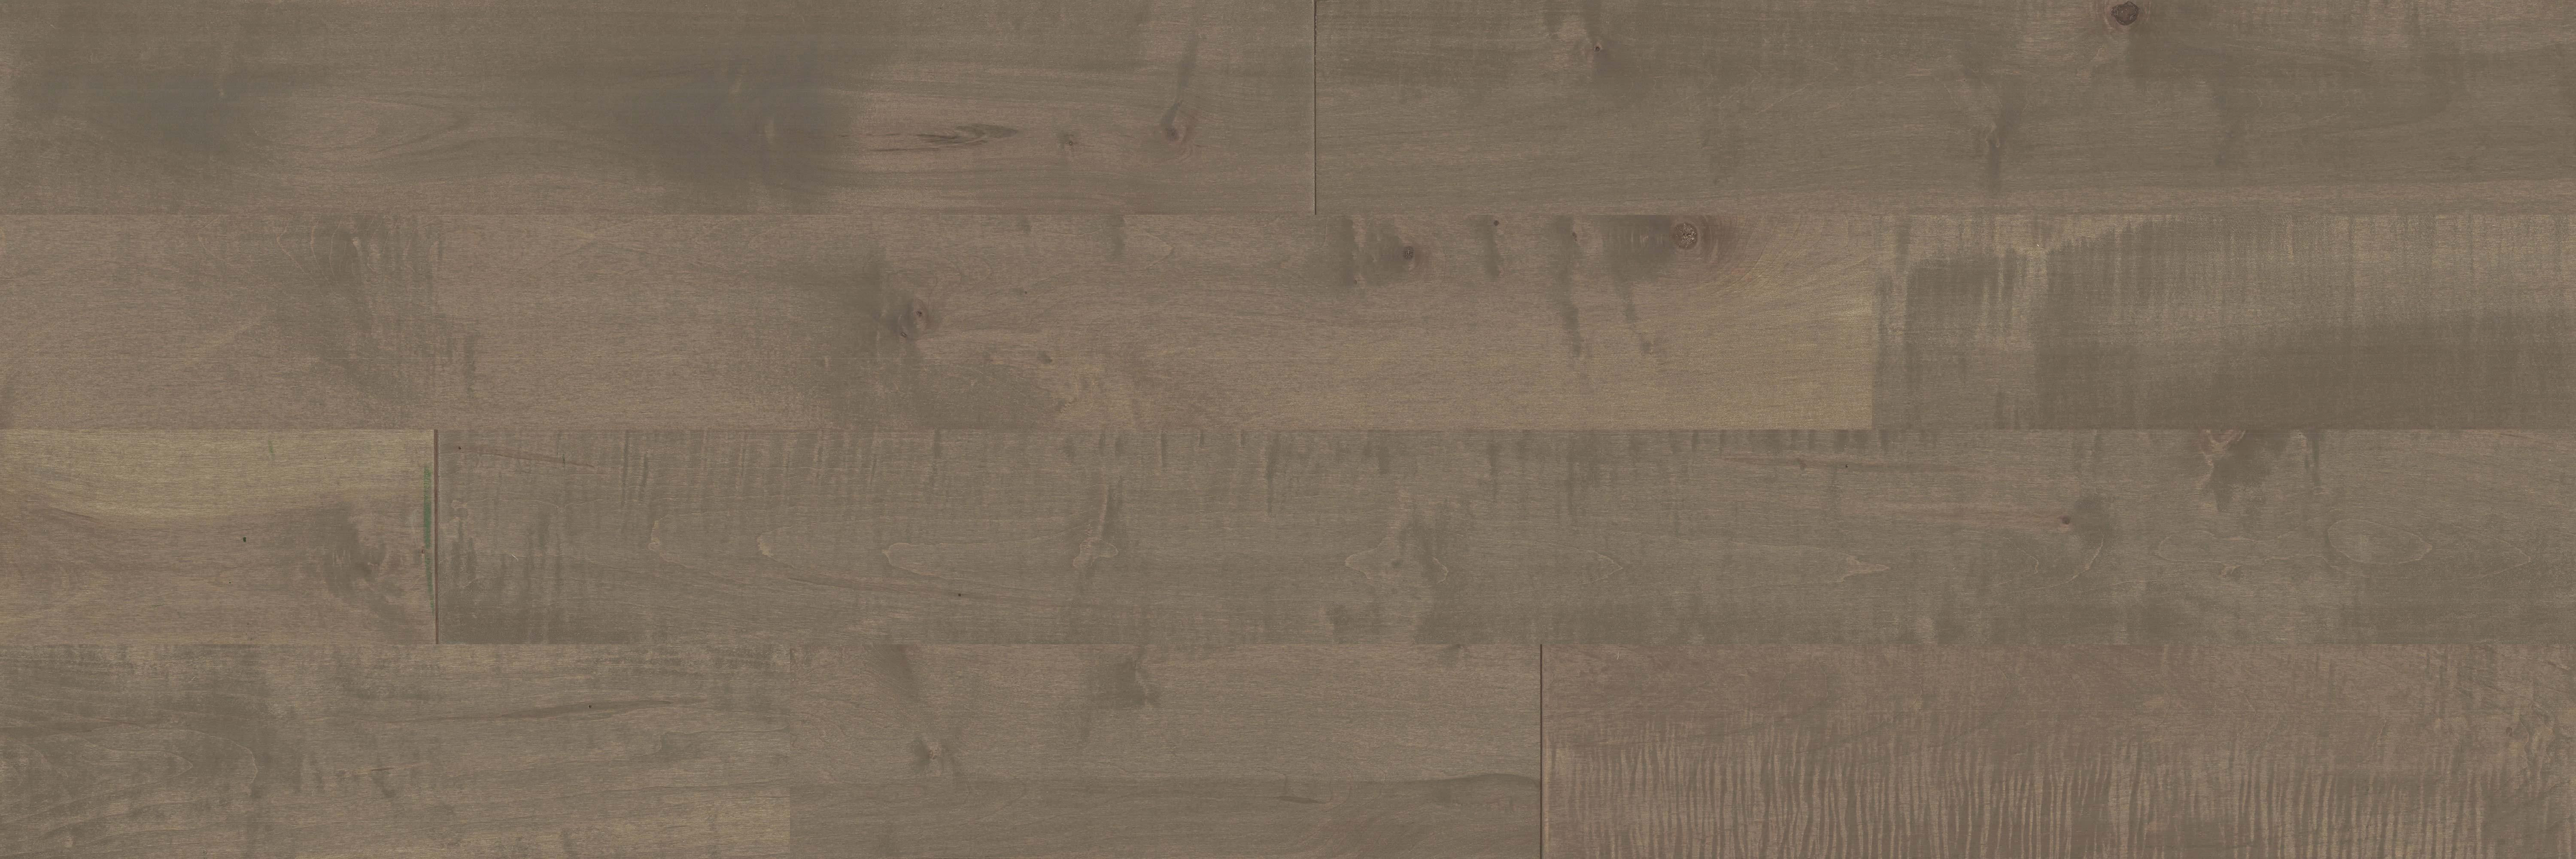 walnut solid hardwood flooring of kingsmill coastal maple 5 wide 3 4 solid hardwood flooring with regard to coastal maple m ucstl5 5 x 60 horizontal